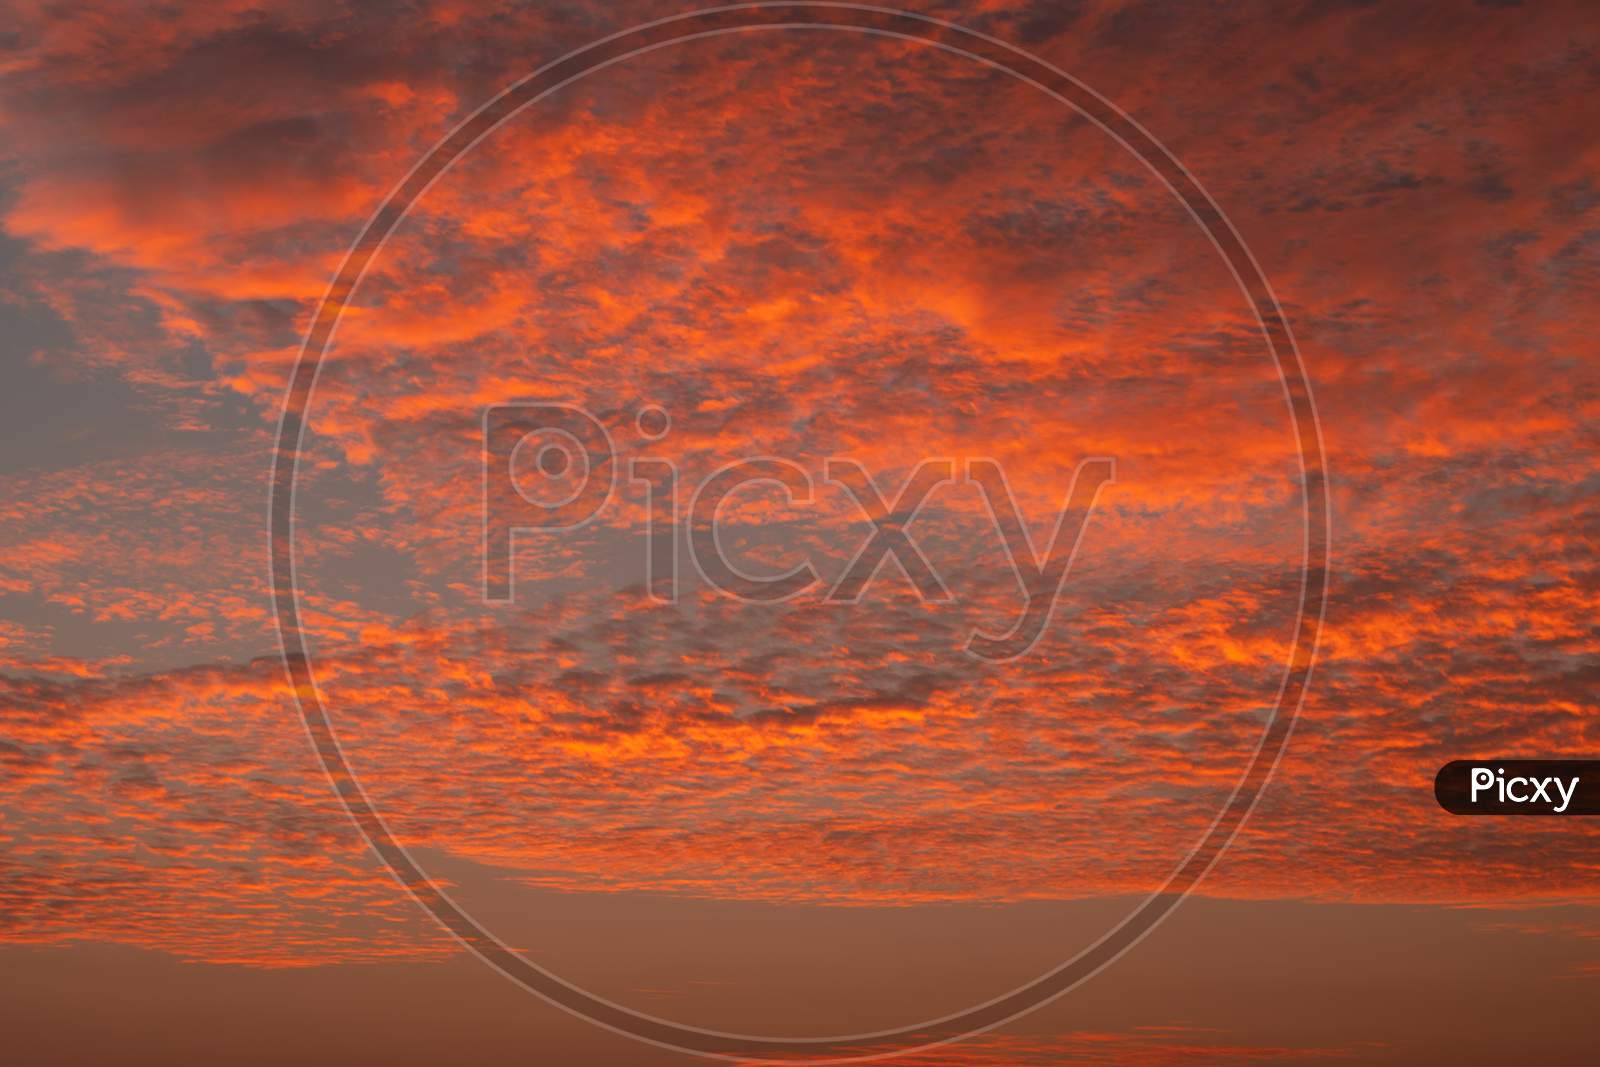 Golden Hour Sunset Dramatic Cloudscape Photograph, Showing Off Nature'S Beauty.